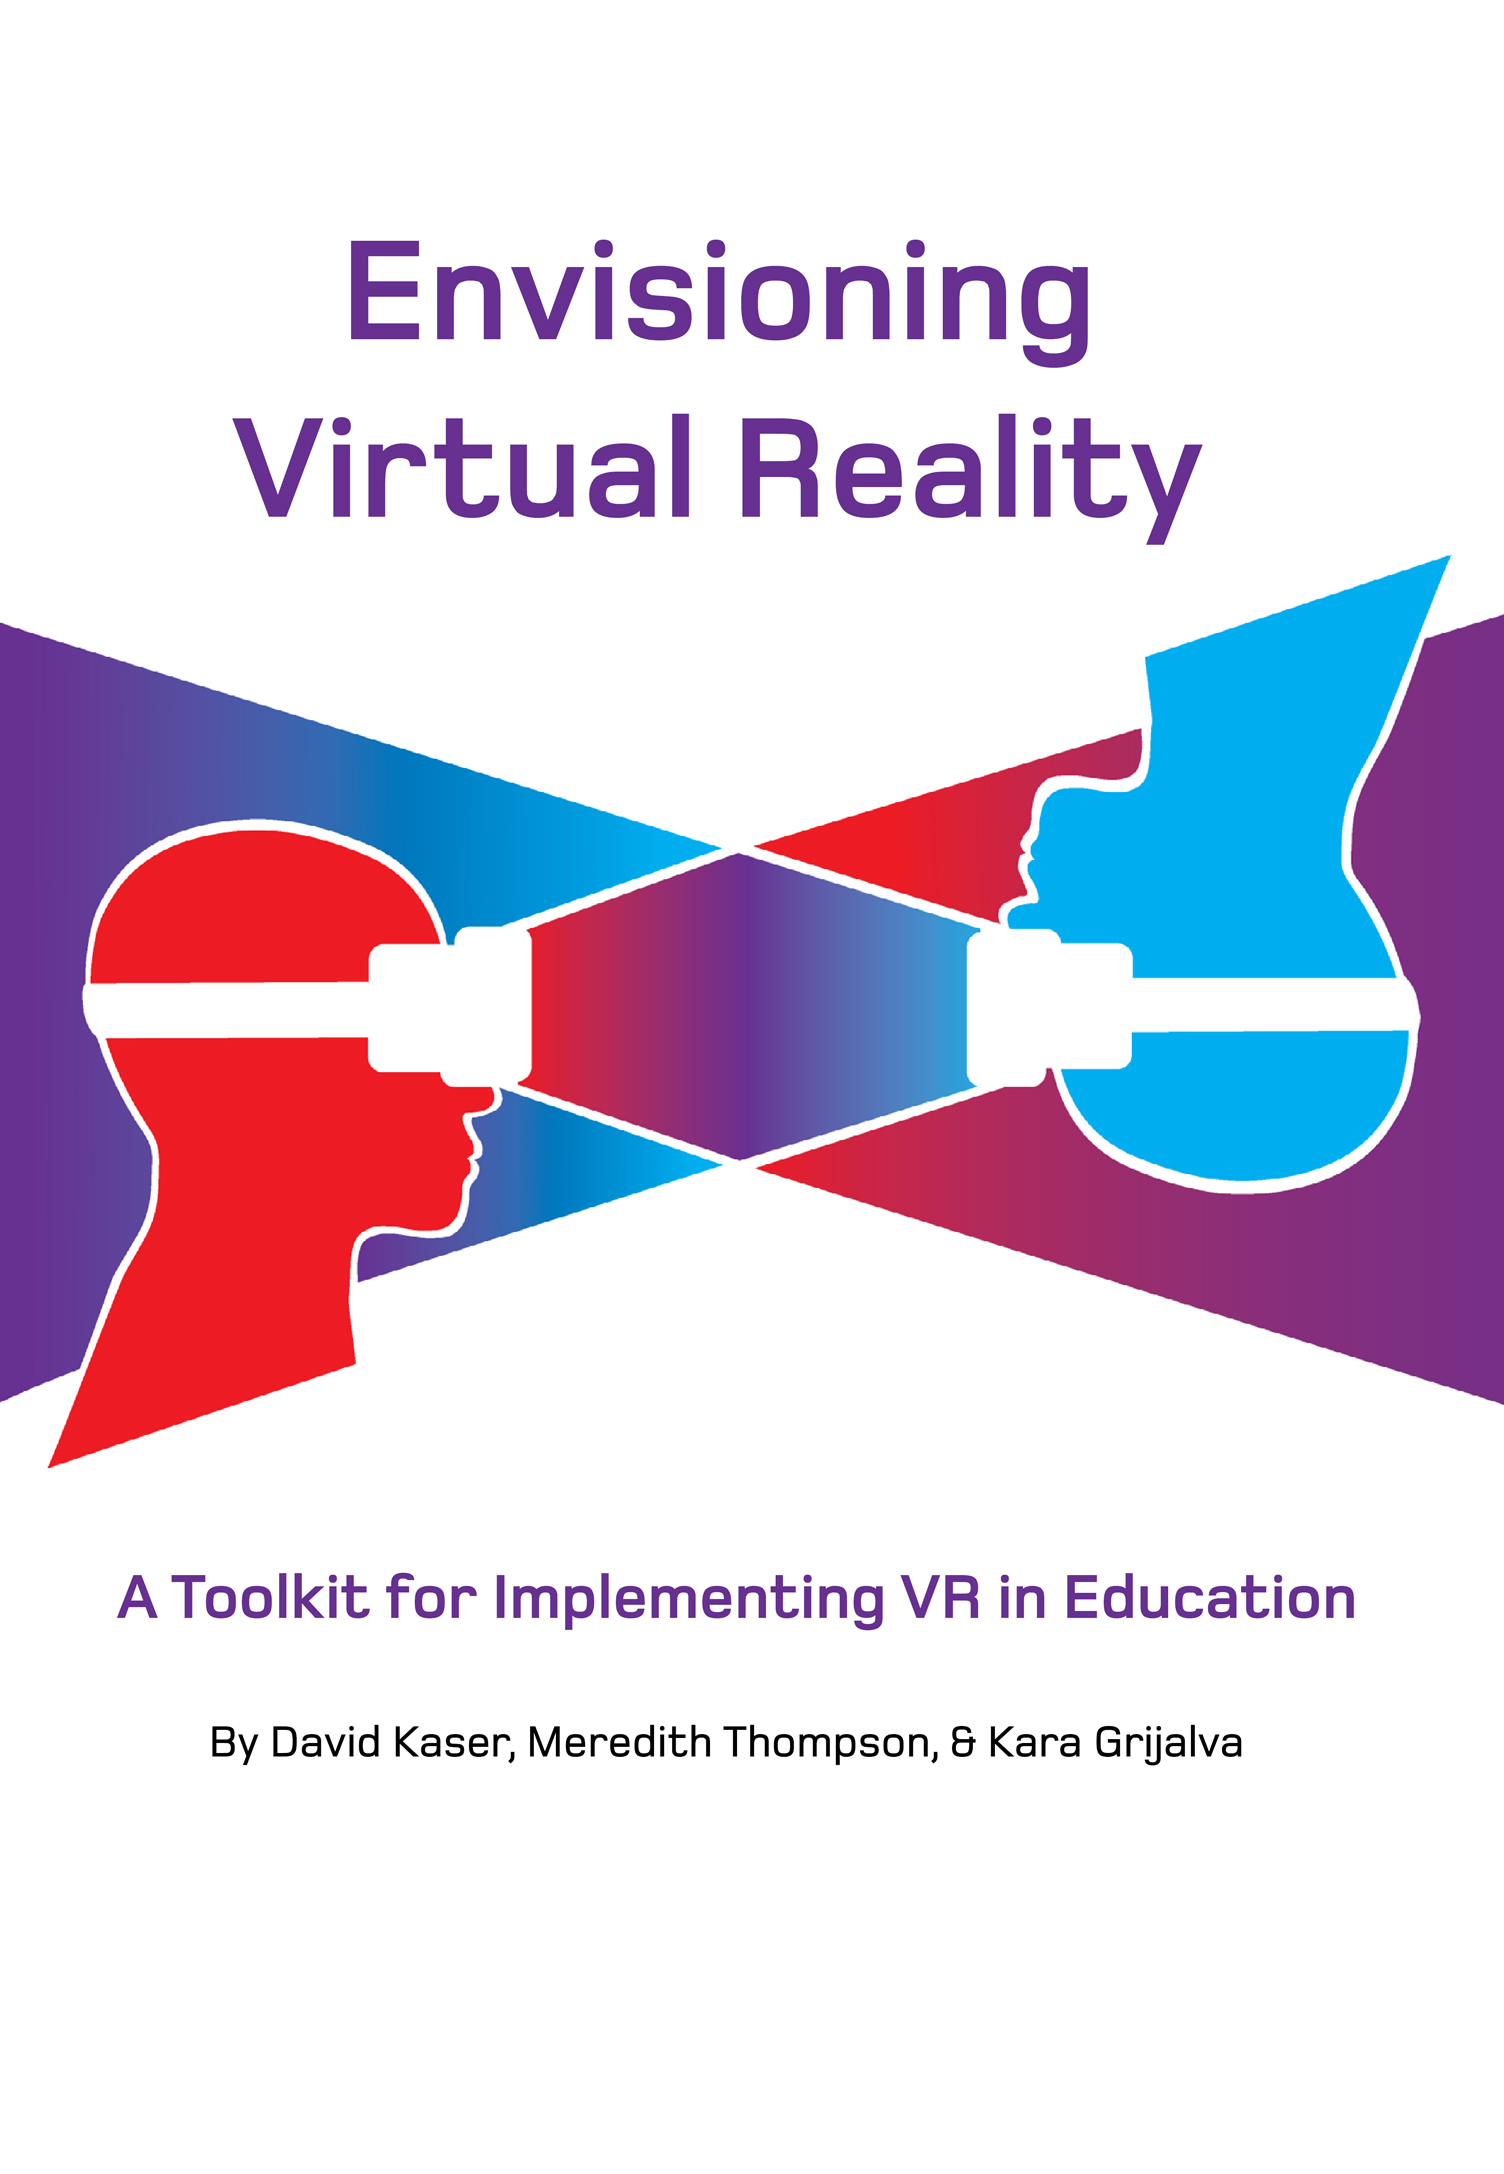 Virtual Toolkit